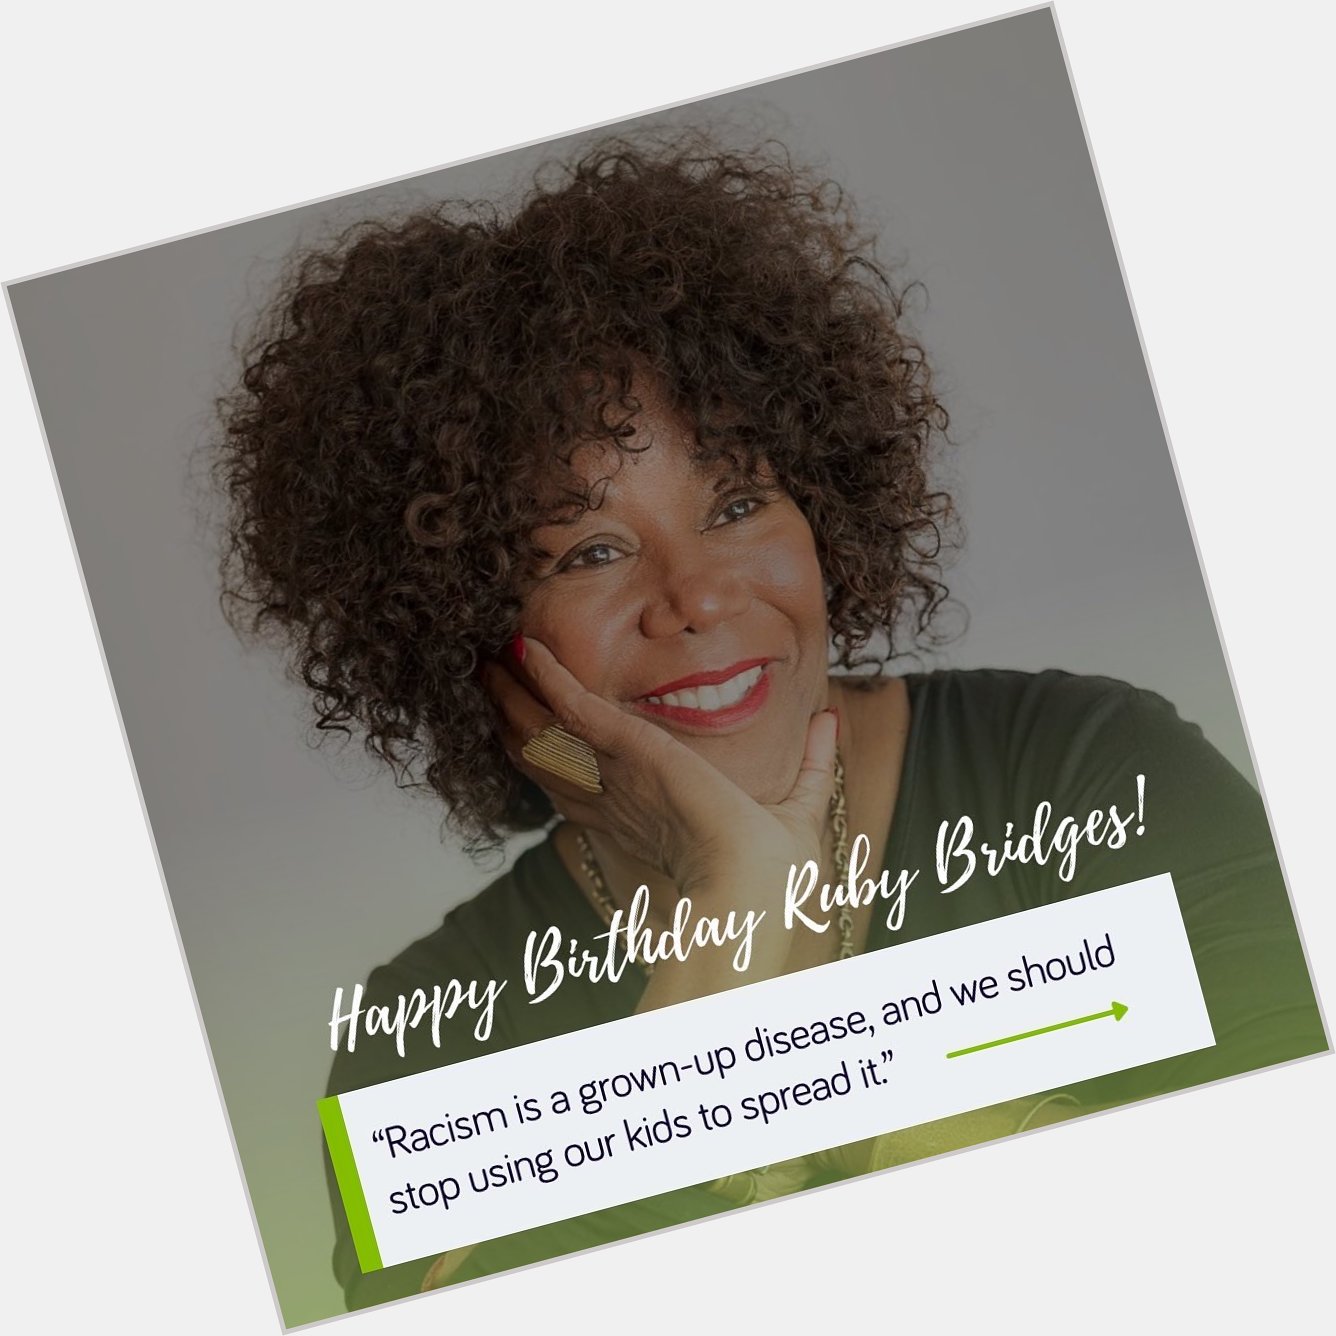 Happy 68th Birthday Ruby Bridges! 